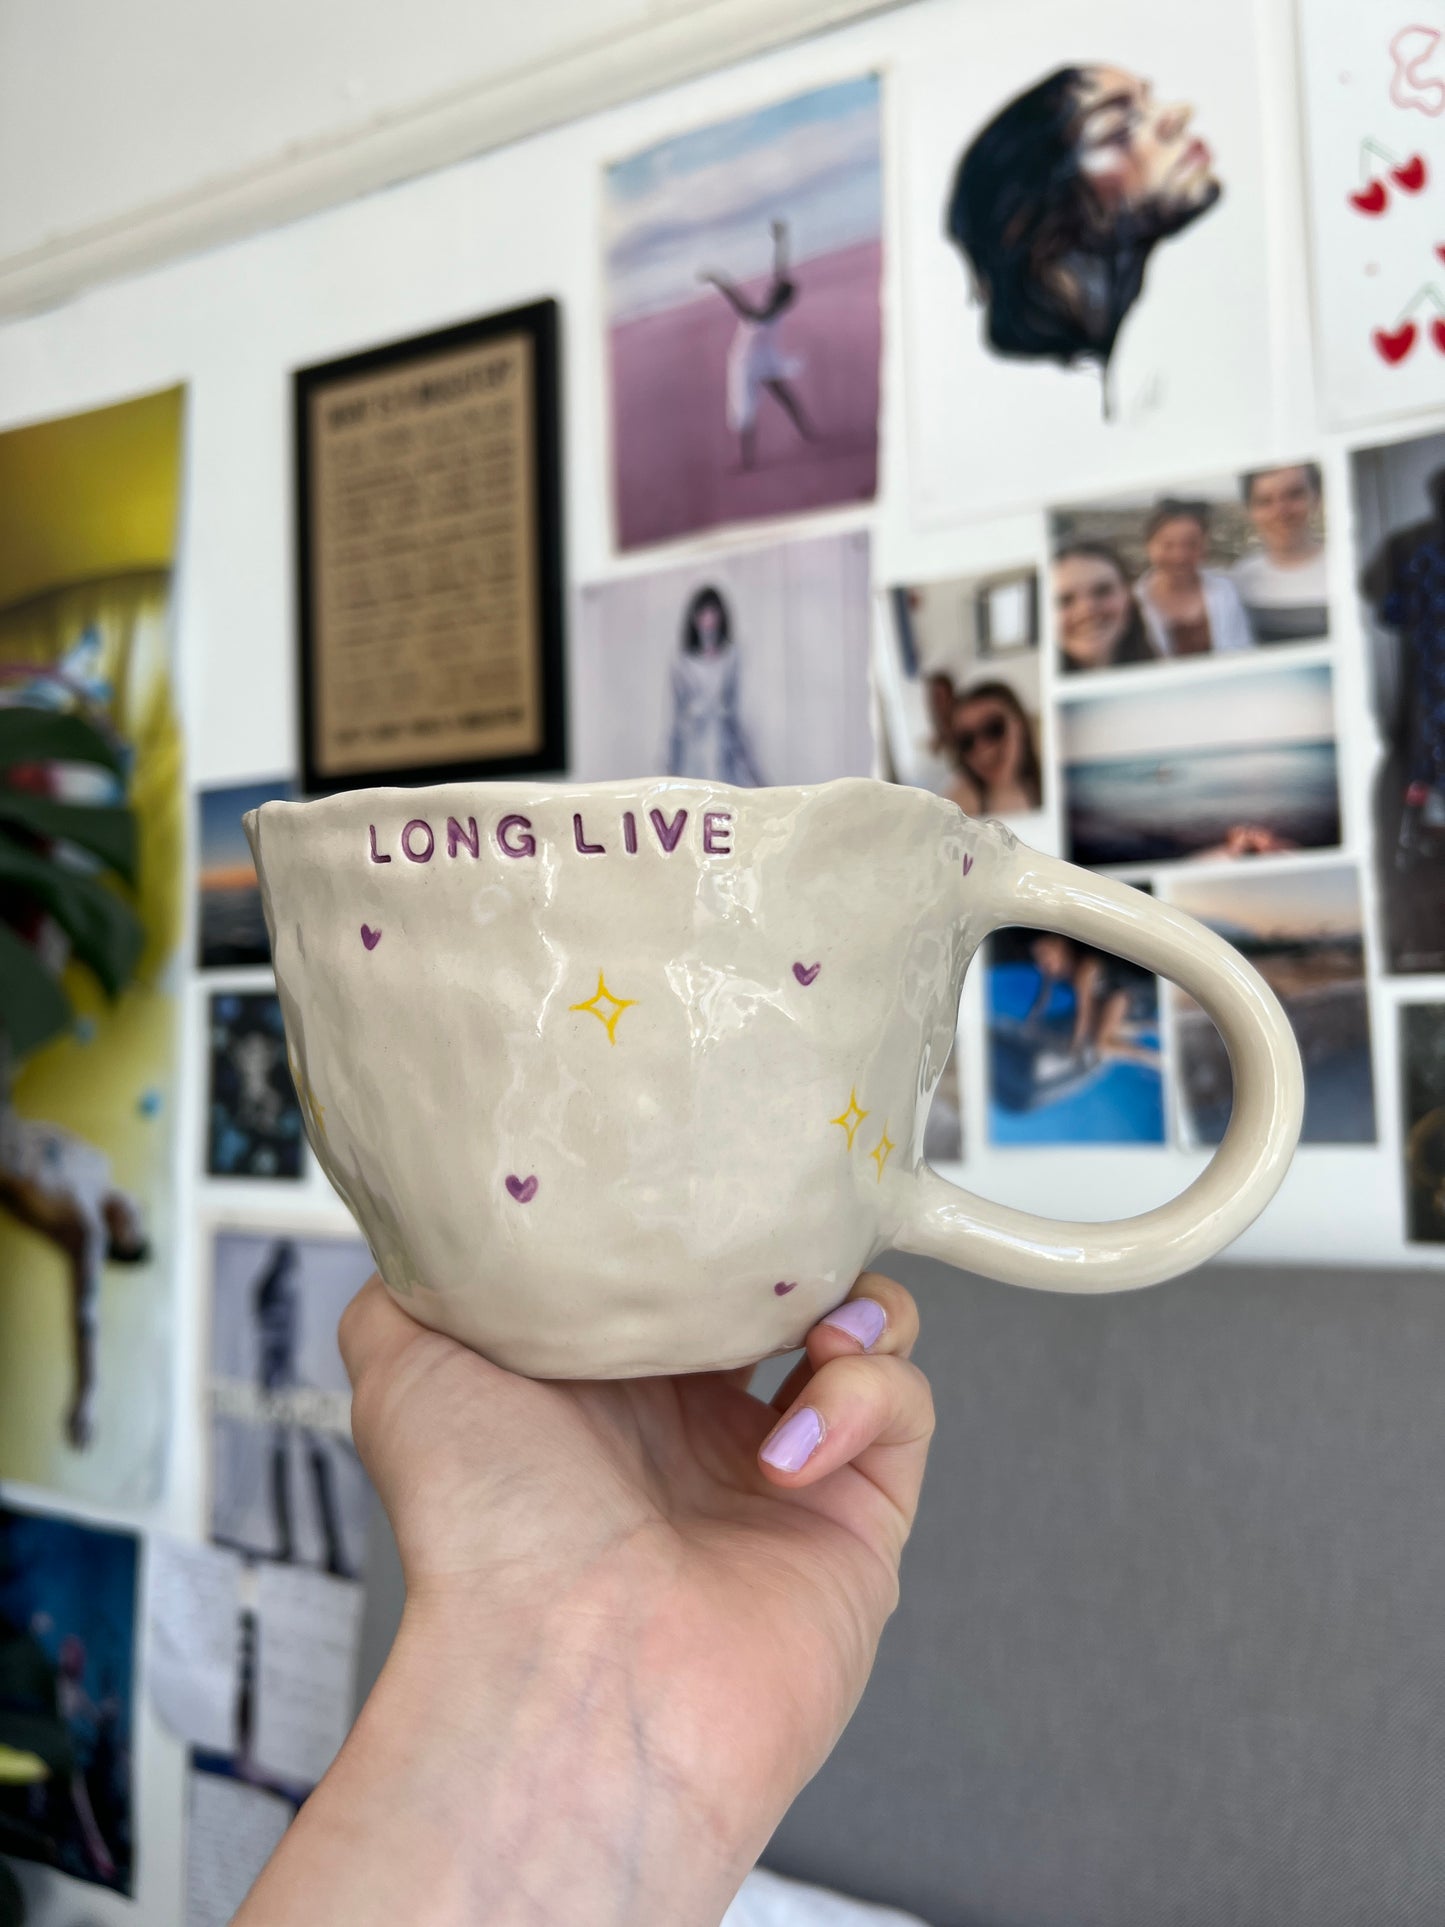 Long live mug